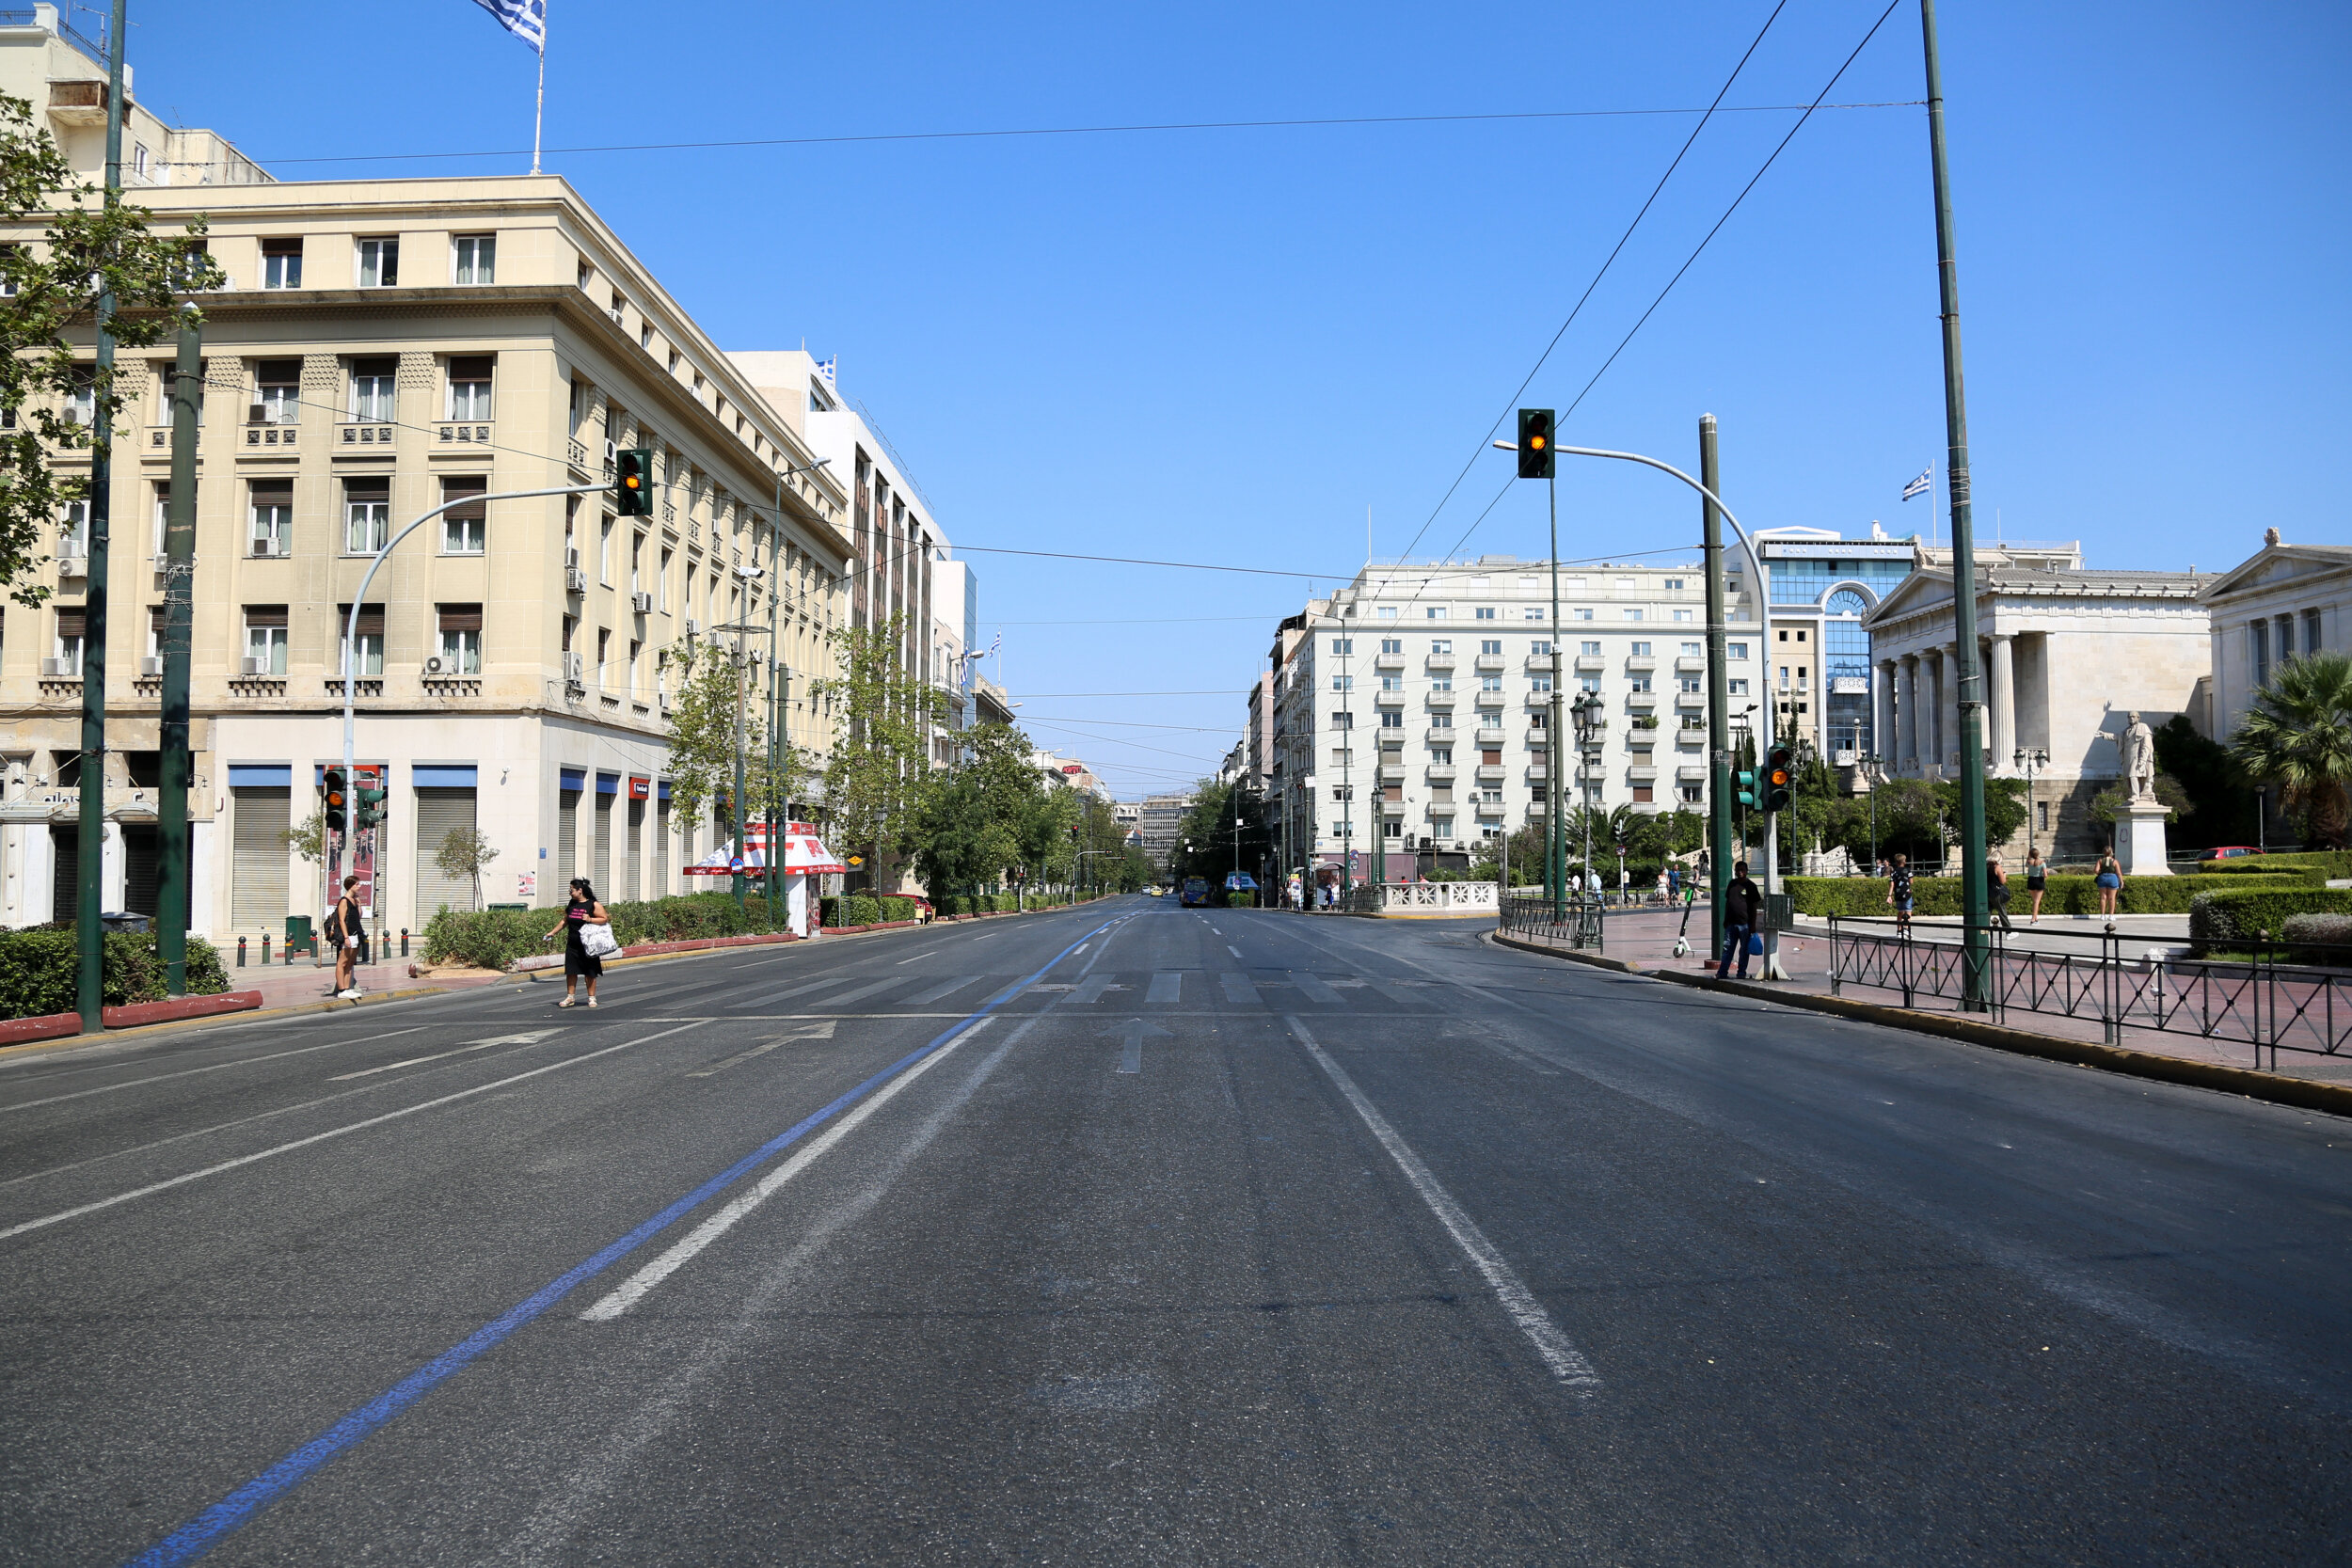 More information about "Προσωρινό περιορισμό (3 μήνες + 3 μήνες παράταση) της κυκλοφορίας οχημάτων στο κέντρο της Αθήνας"